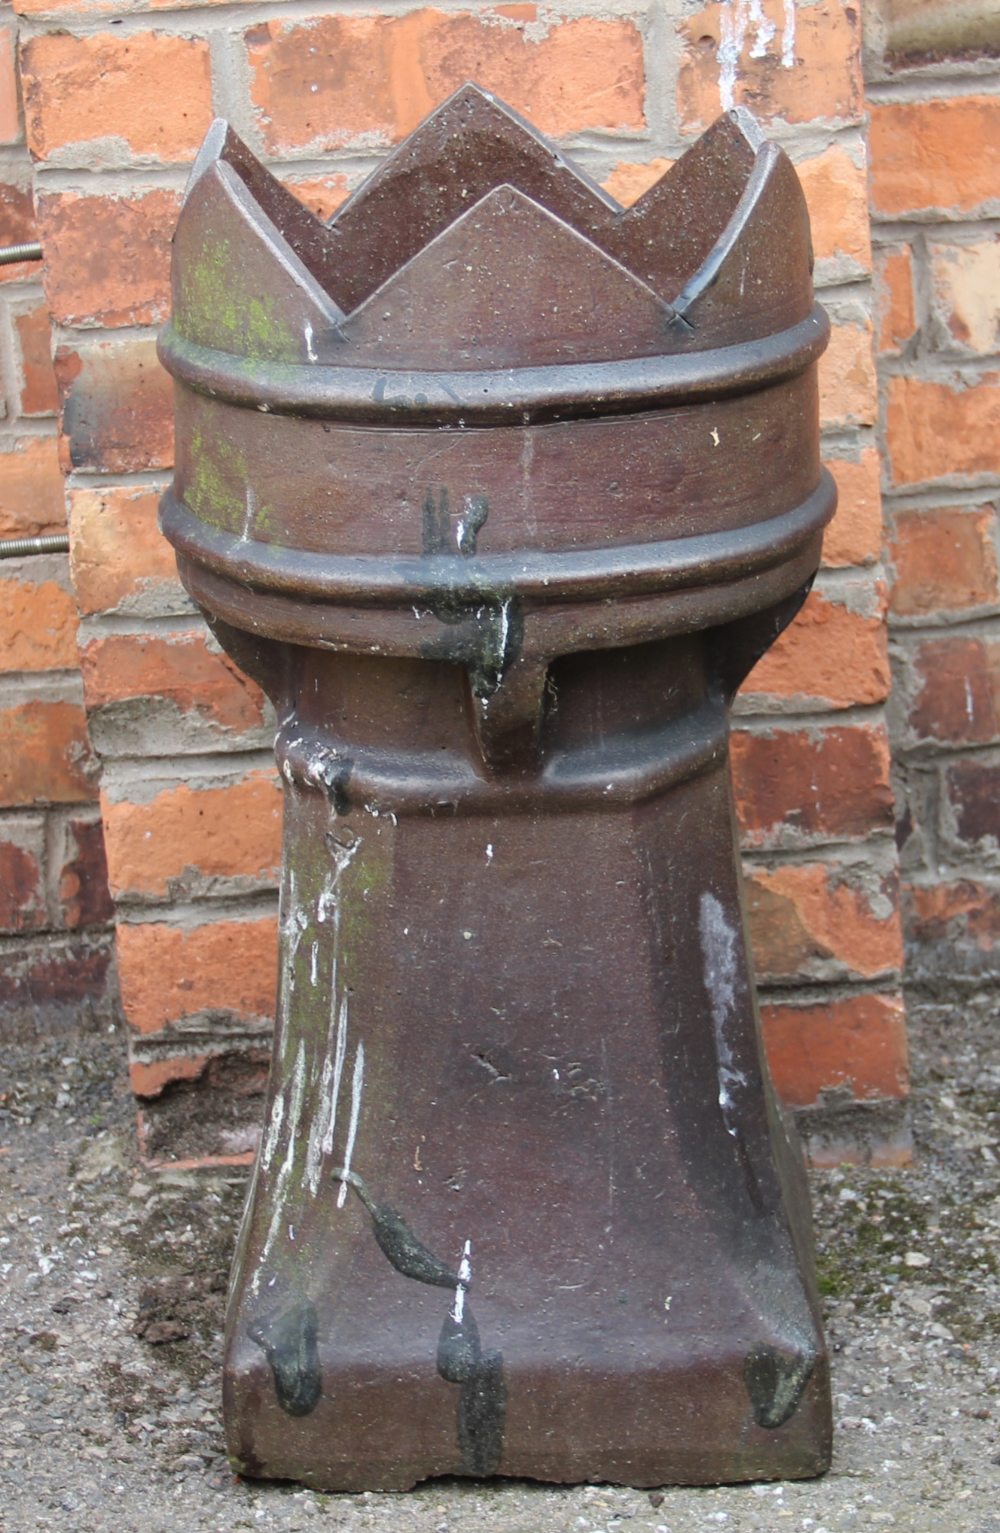 A crown top chimney pot,